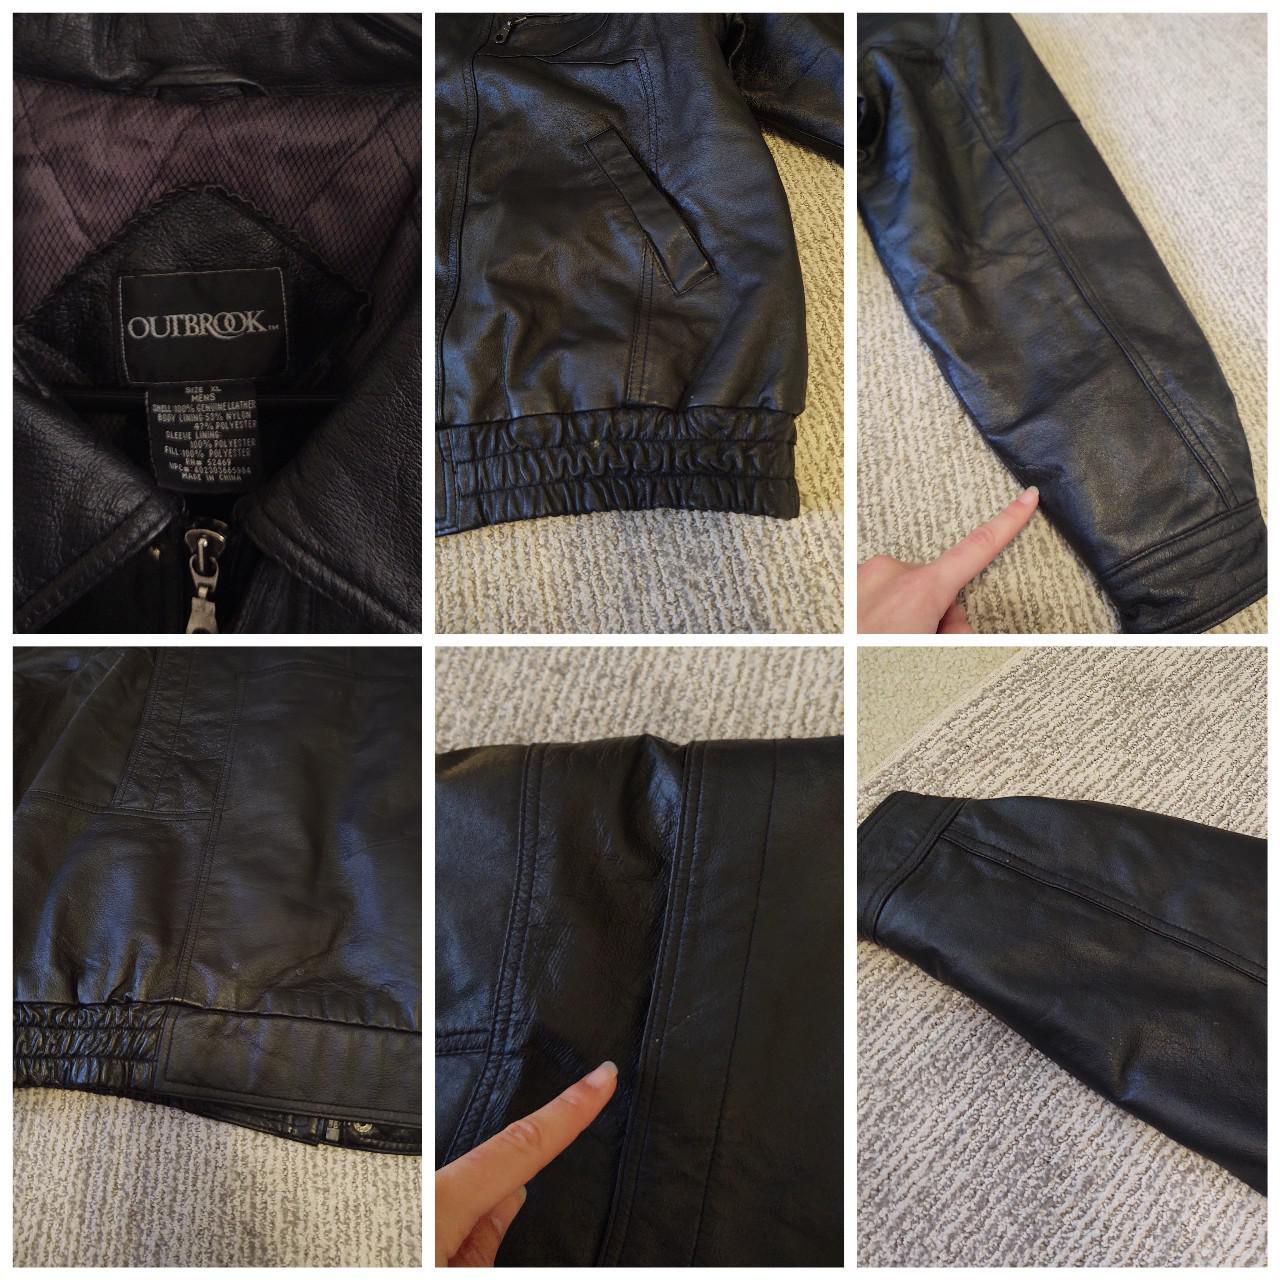 Product Image 3 - Outbrook black leather jacket size